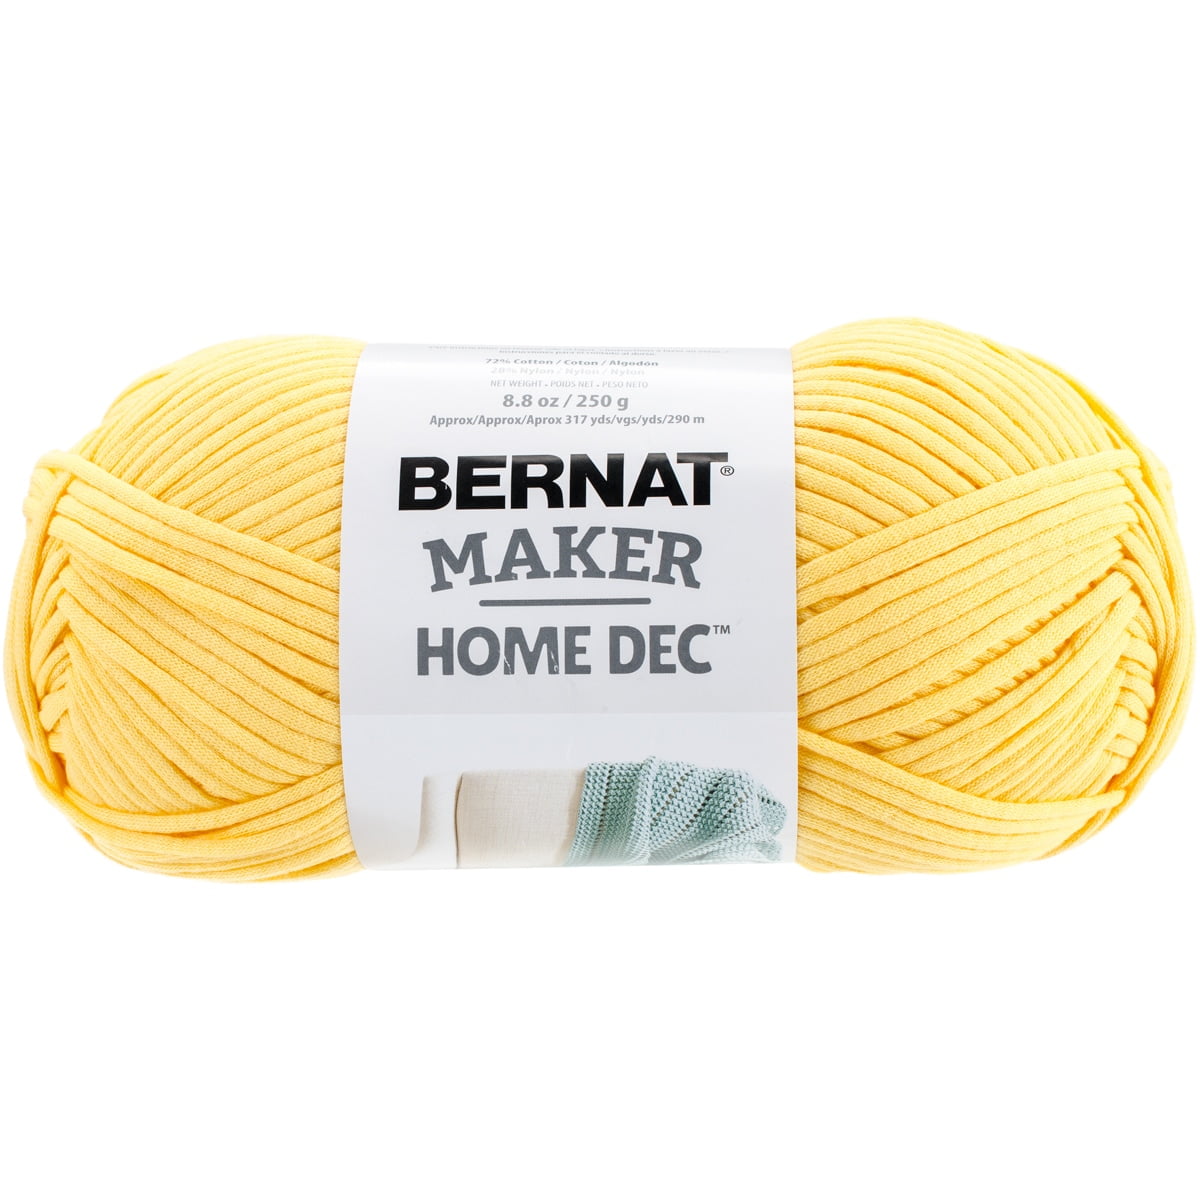 Bernat Maker Home Dec Yarn - Aqua